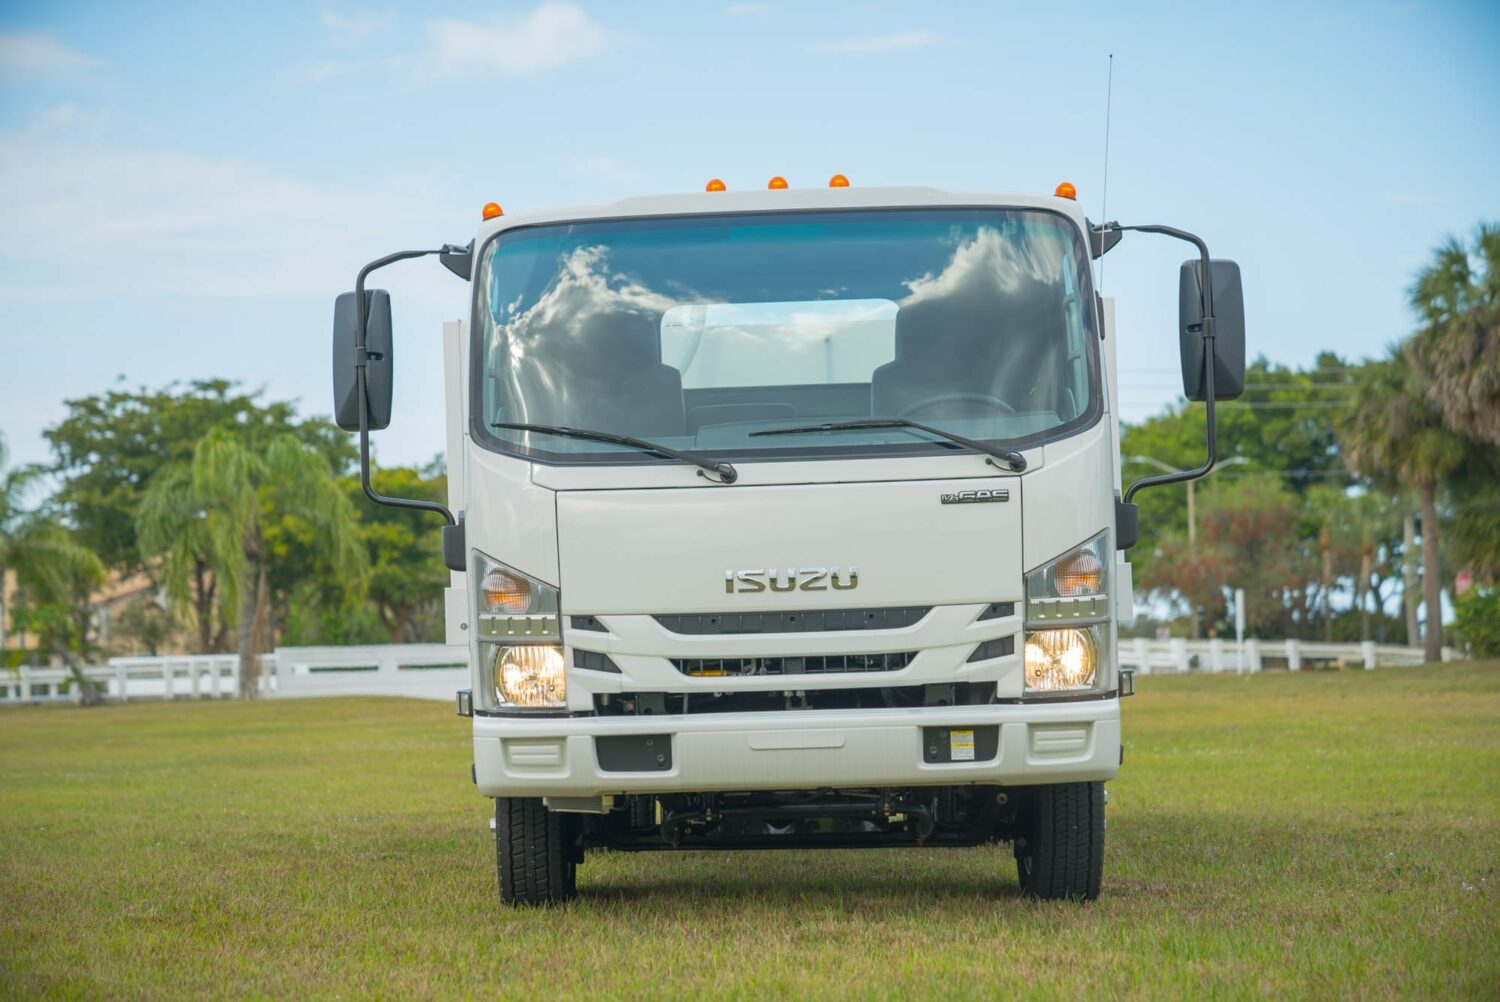 Commercial Truck Sales Florida